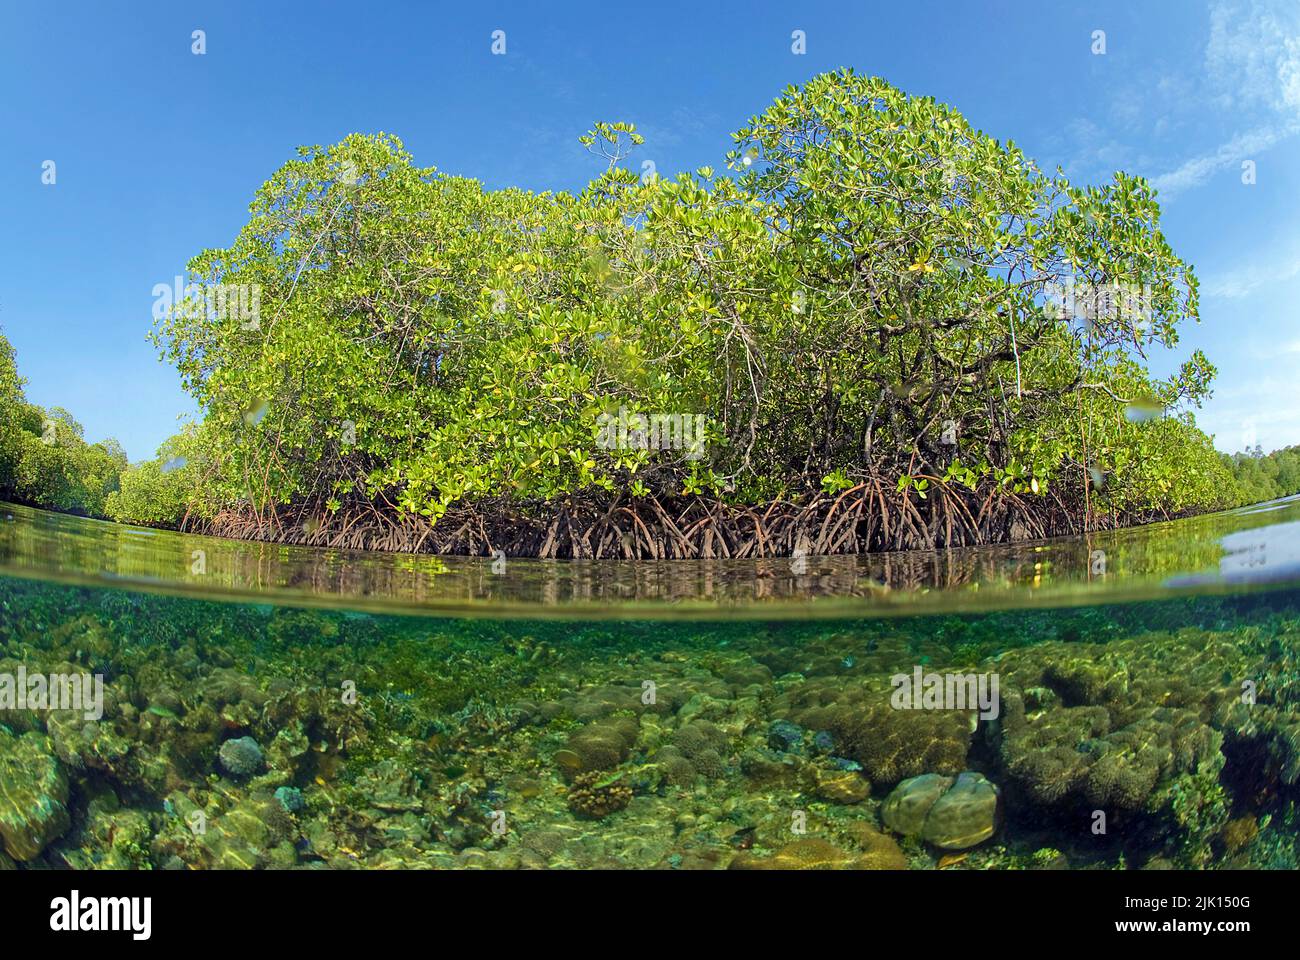 Split image, over under, Mangroves (Rhizophoraceae) are protected worldwide, Kri island, Raja Ampat, Irian Jaya, Indonesia, Pacific ocean, Asia Stock Photo